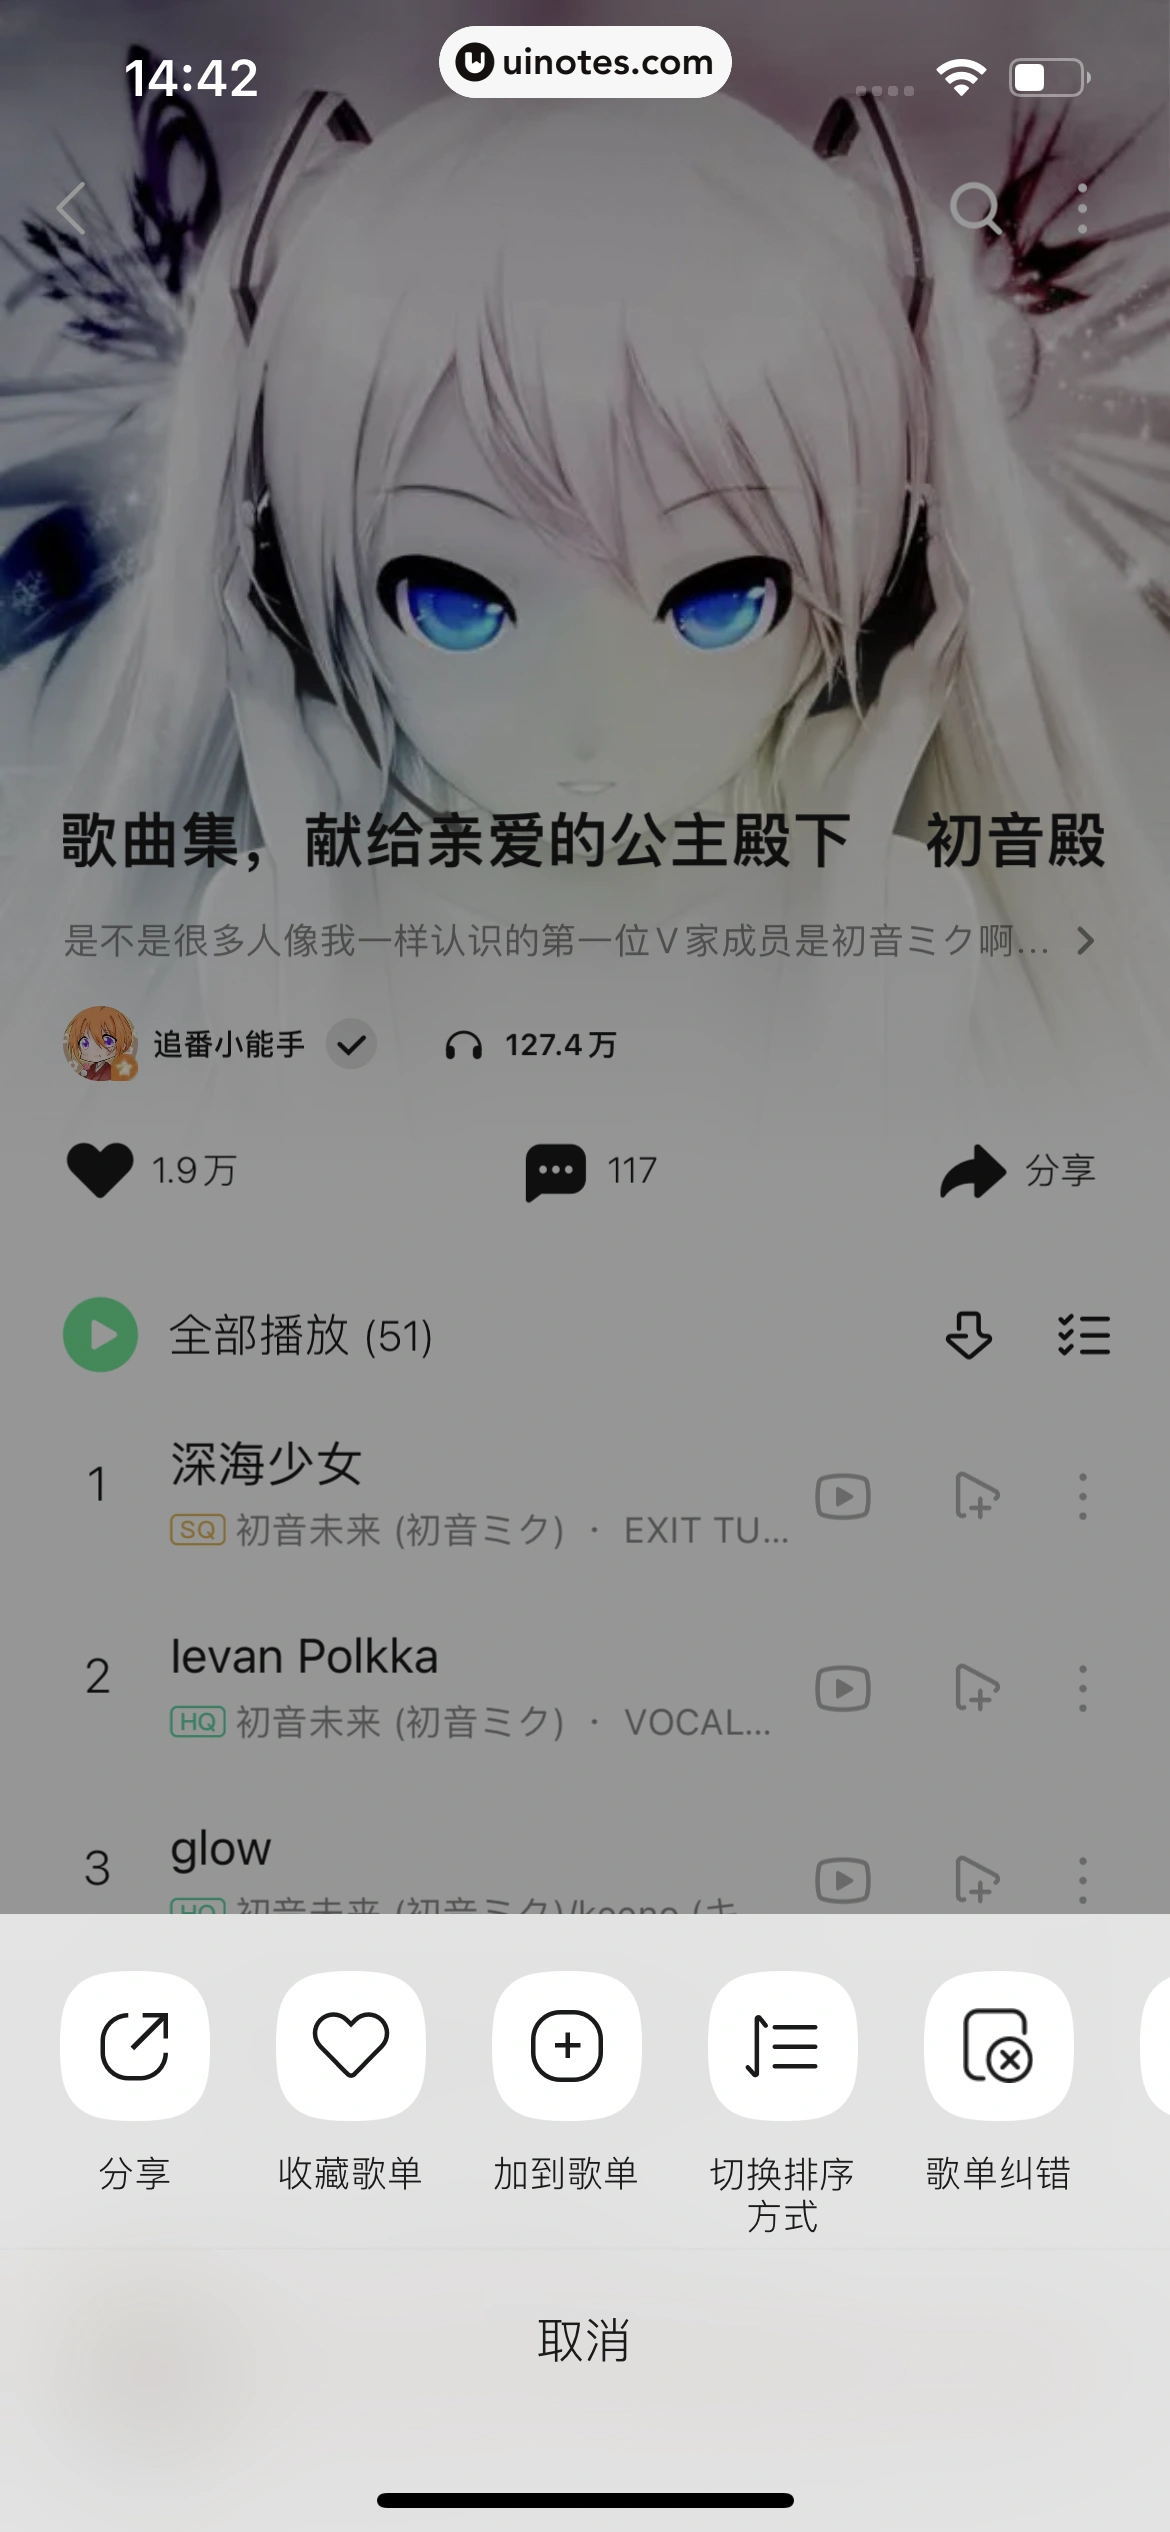 QQ音乐 App 截图 137 - UI Notes